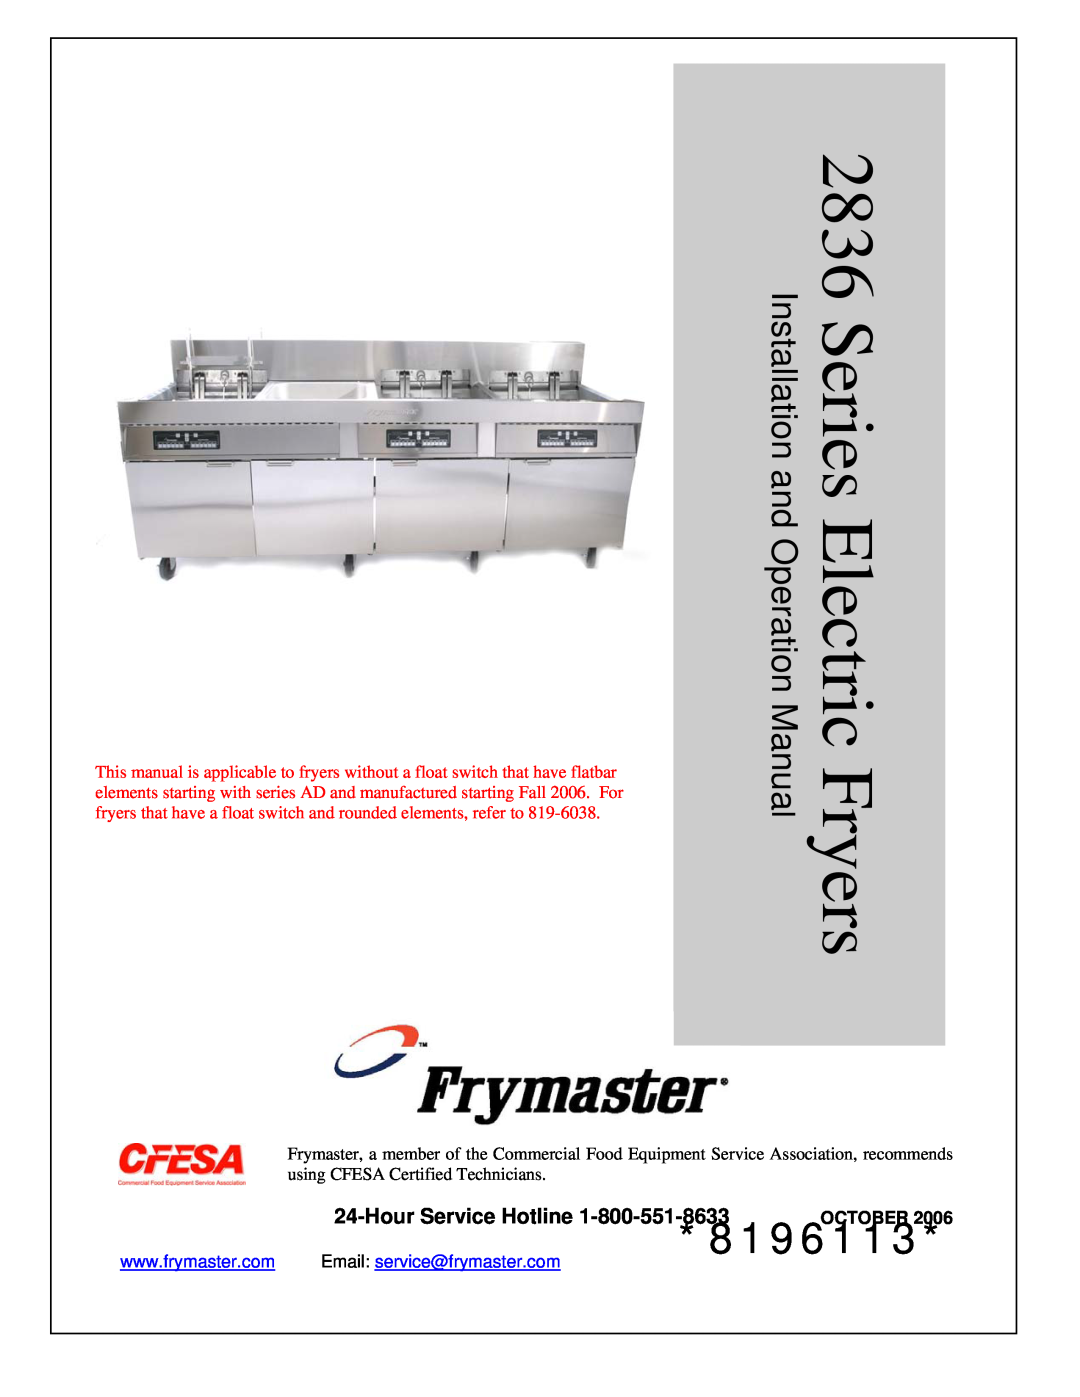 Frymaster 2836 Series operation manual 8196113, HourService Hotline, October 